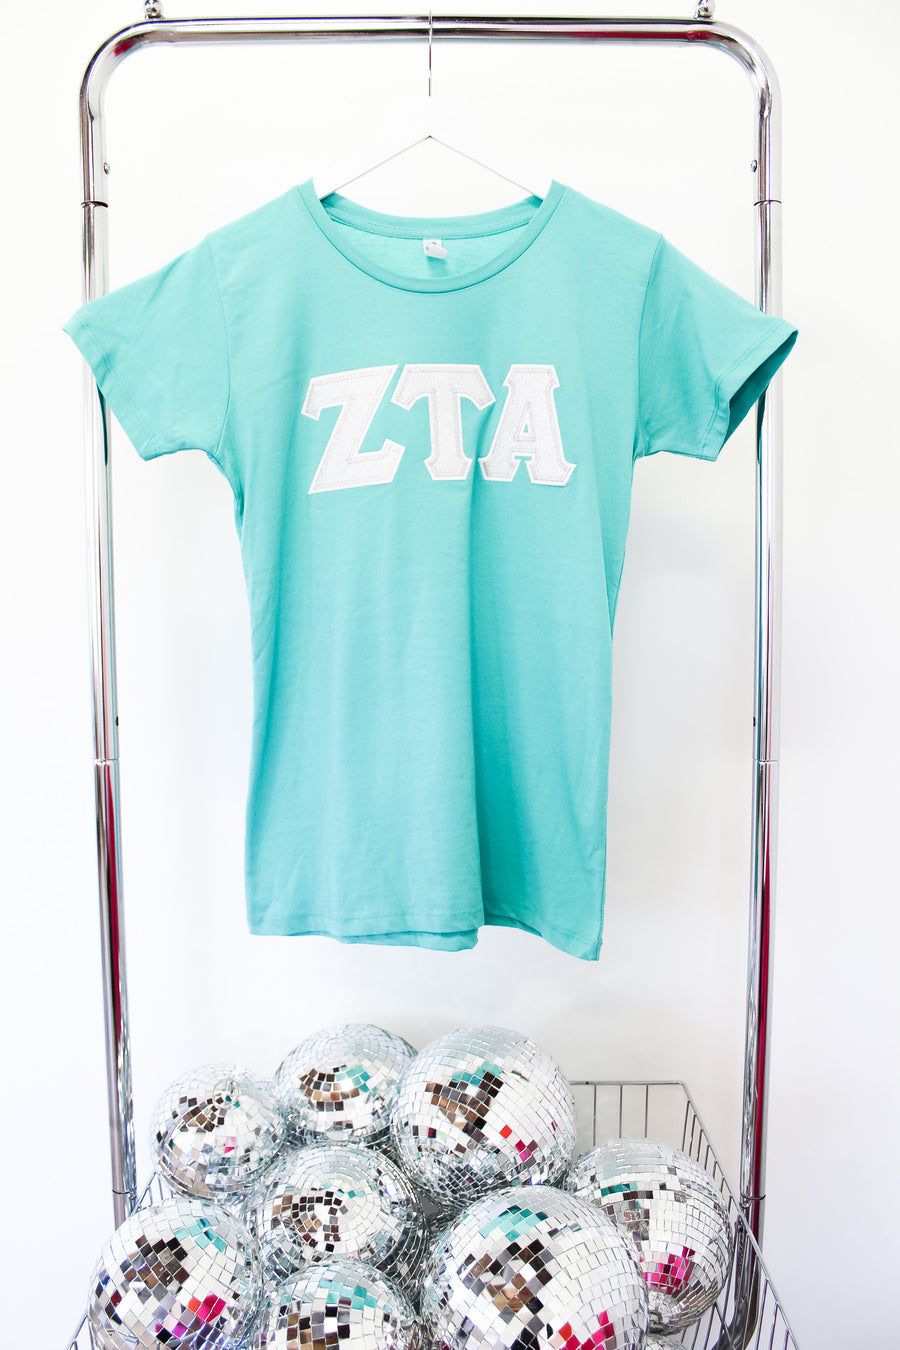 Zeta Tau Alpha Embroidered Letter Tee - TEAL